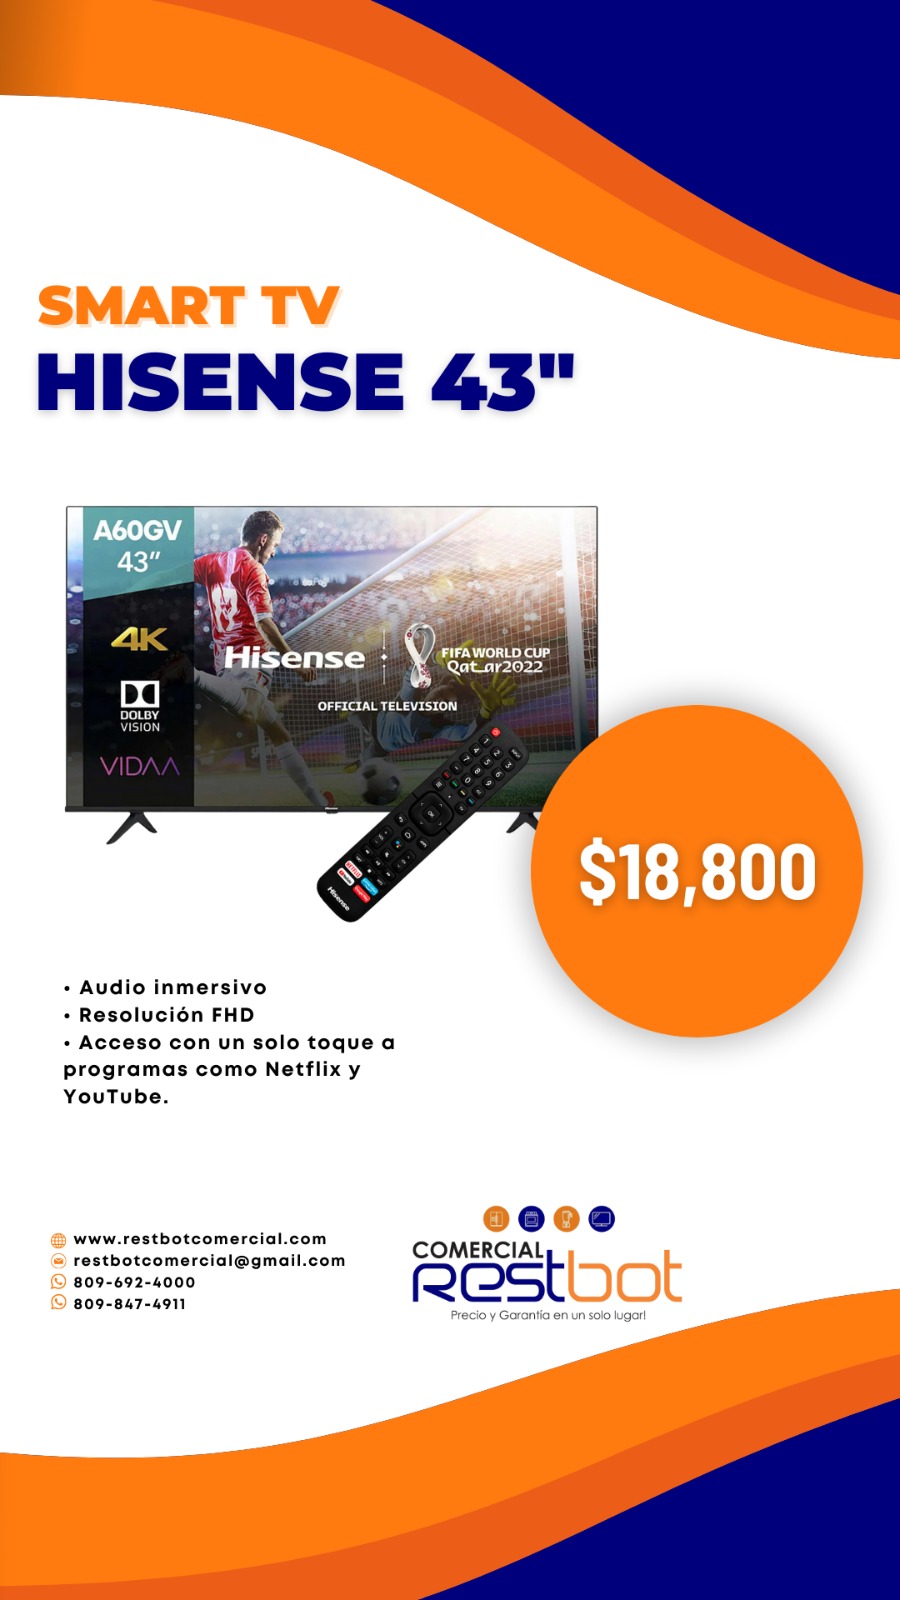 Smart TV Hisense 43” Foto 7185577-1.jpg